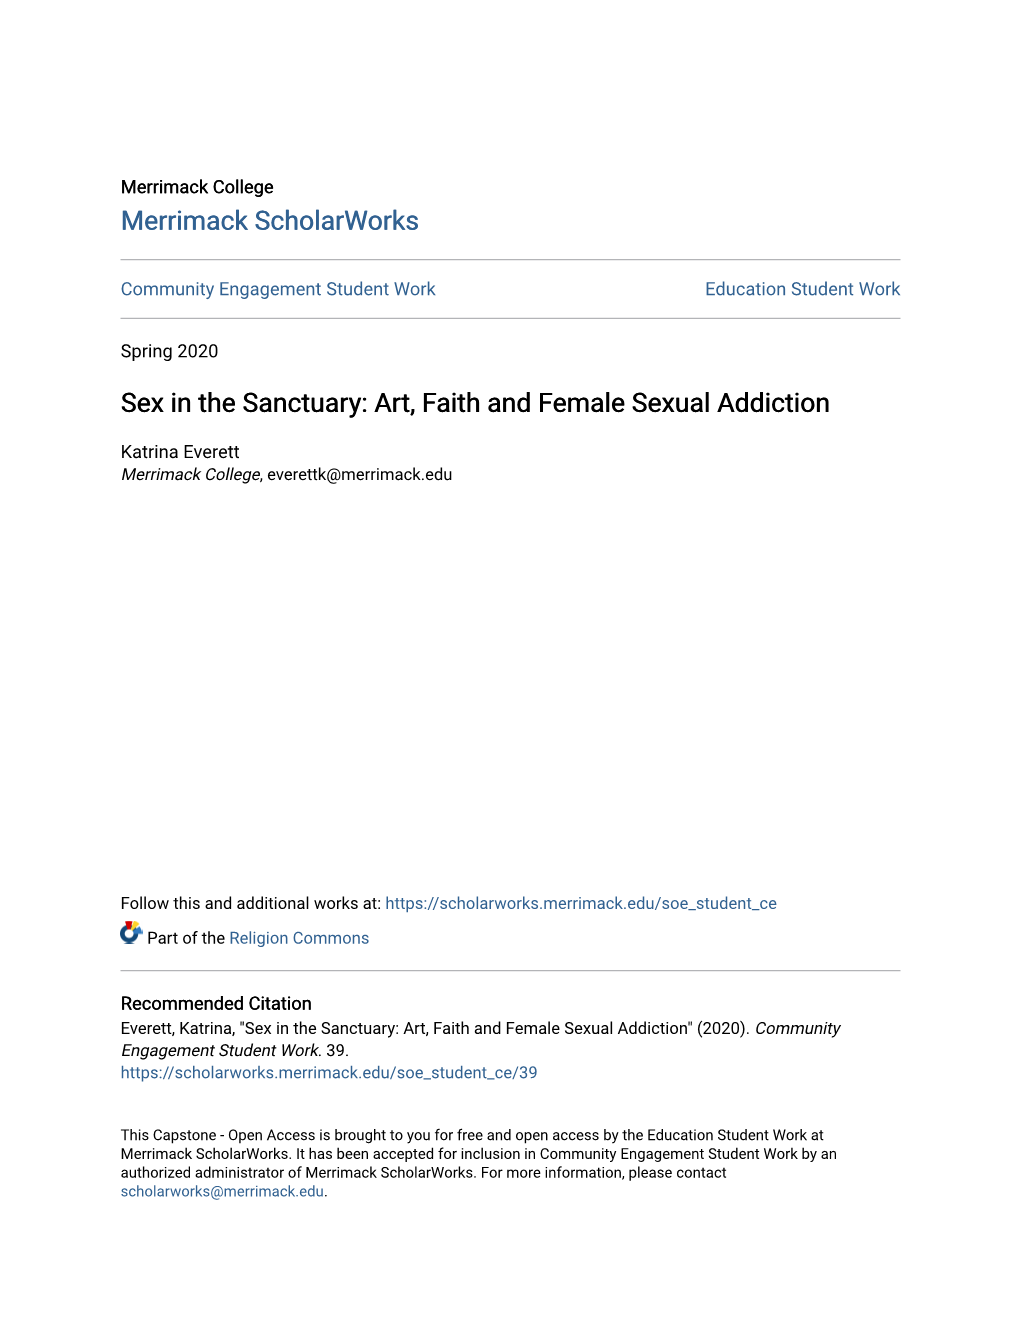 Sex in the Sanctuary: Art, Faith and Female Sexual Addiction